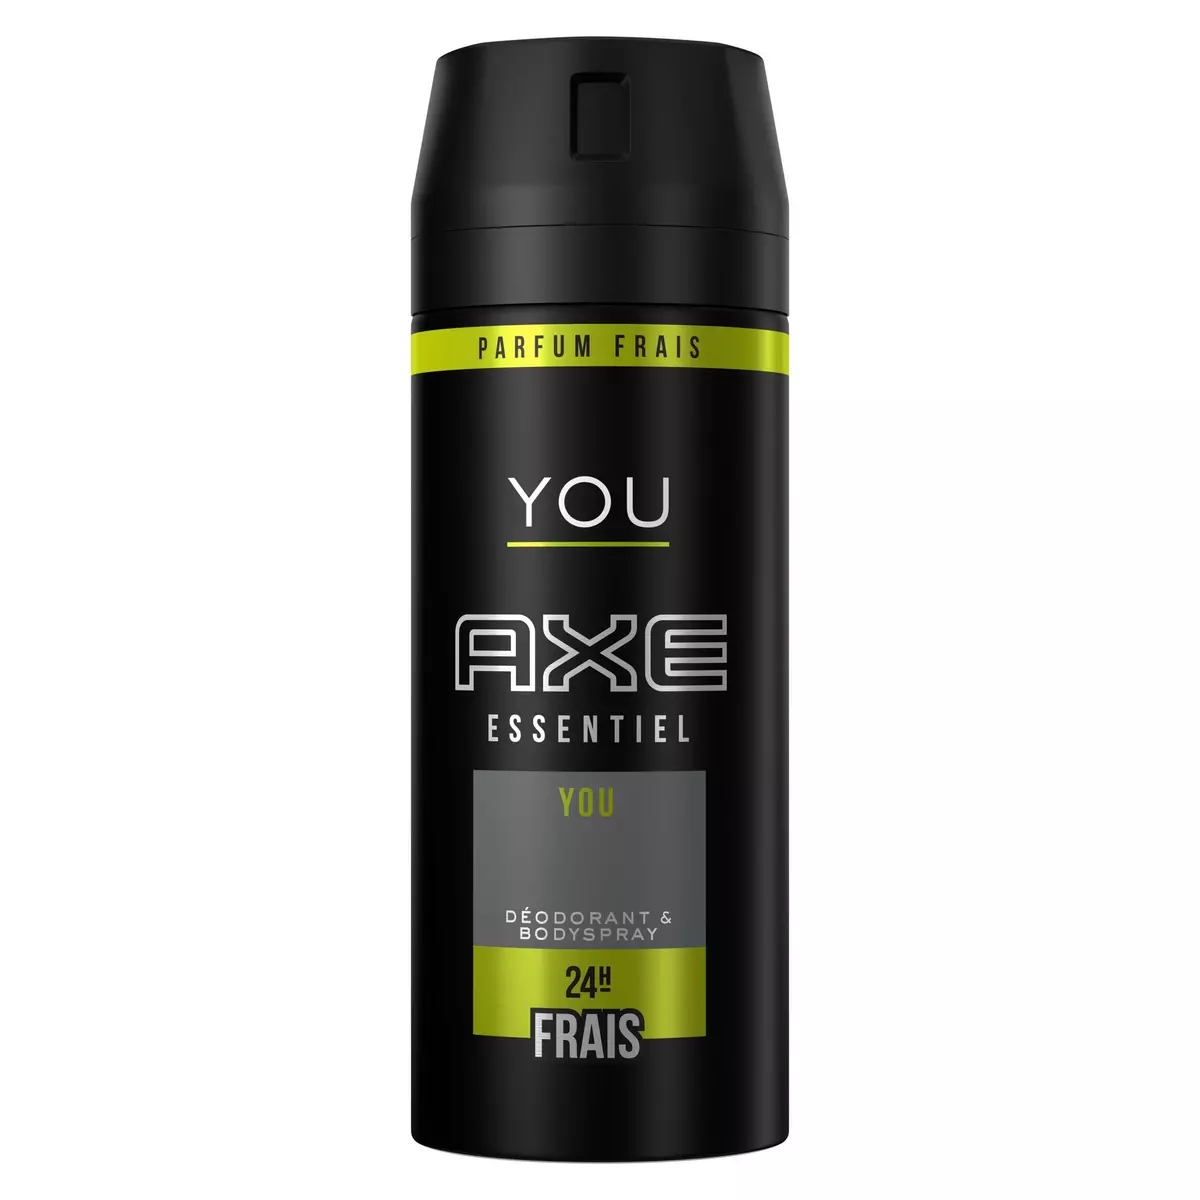 AXE Essentiel déodorant spray homme 24h you parfum frais 150ml